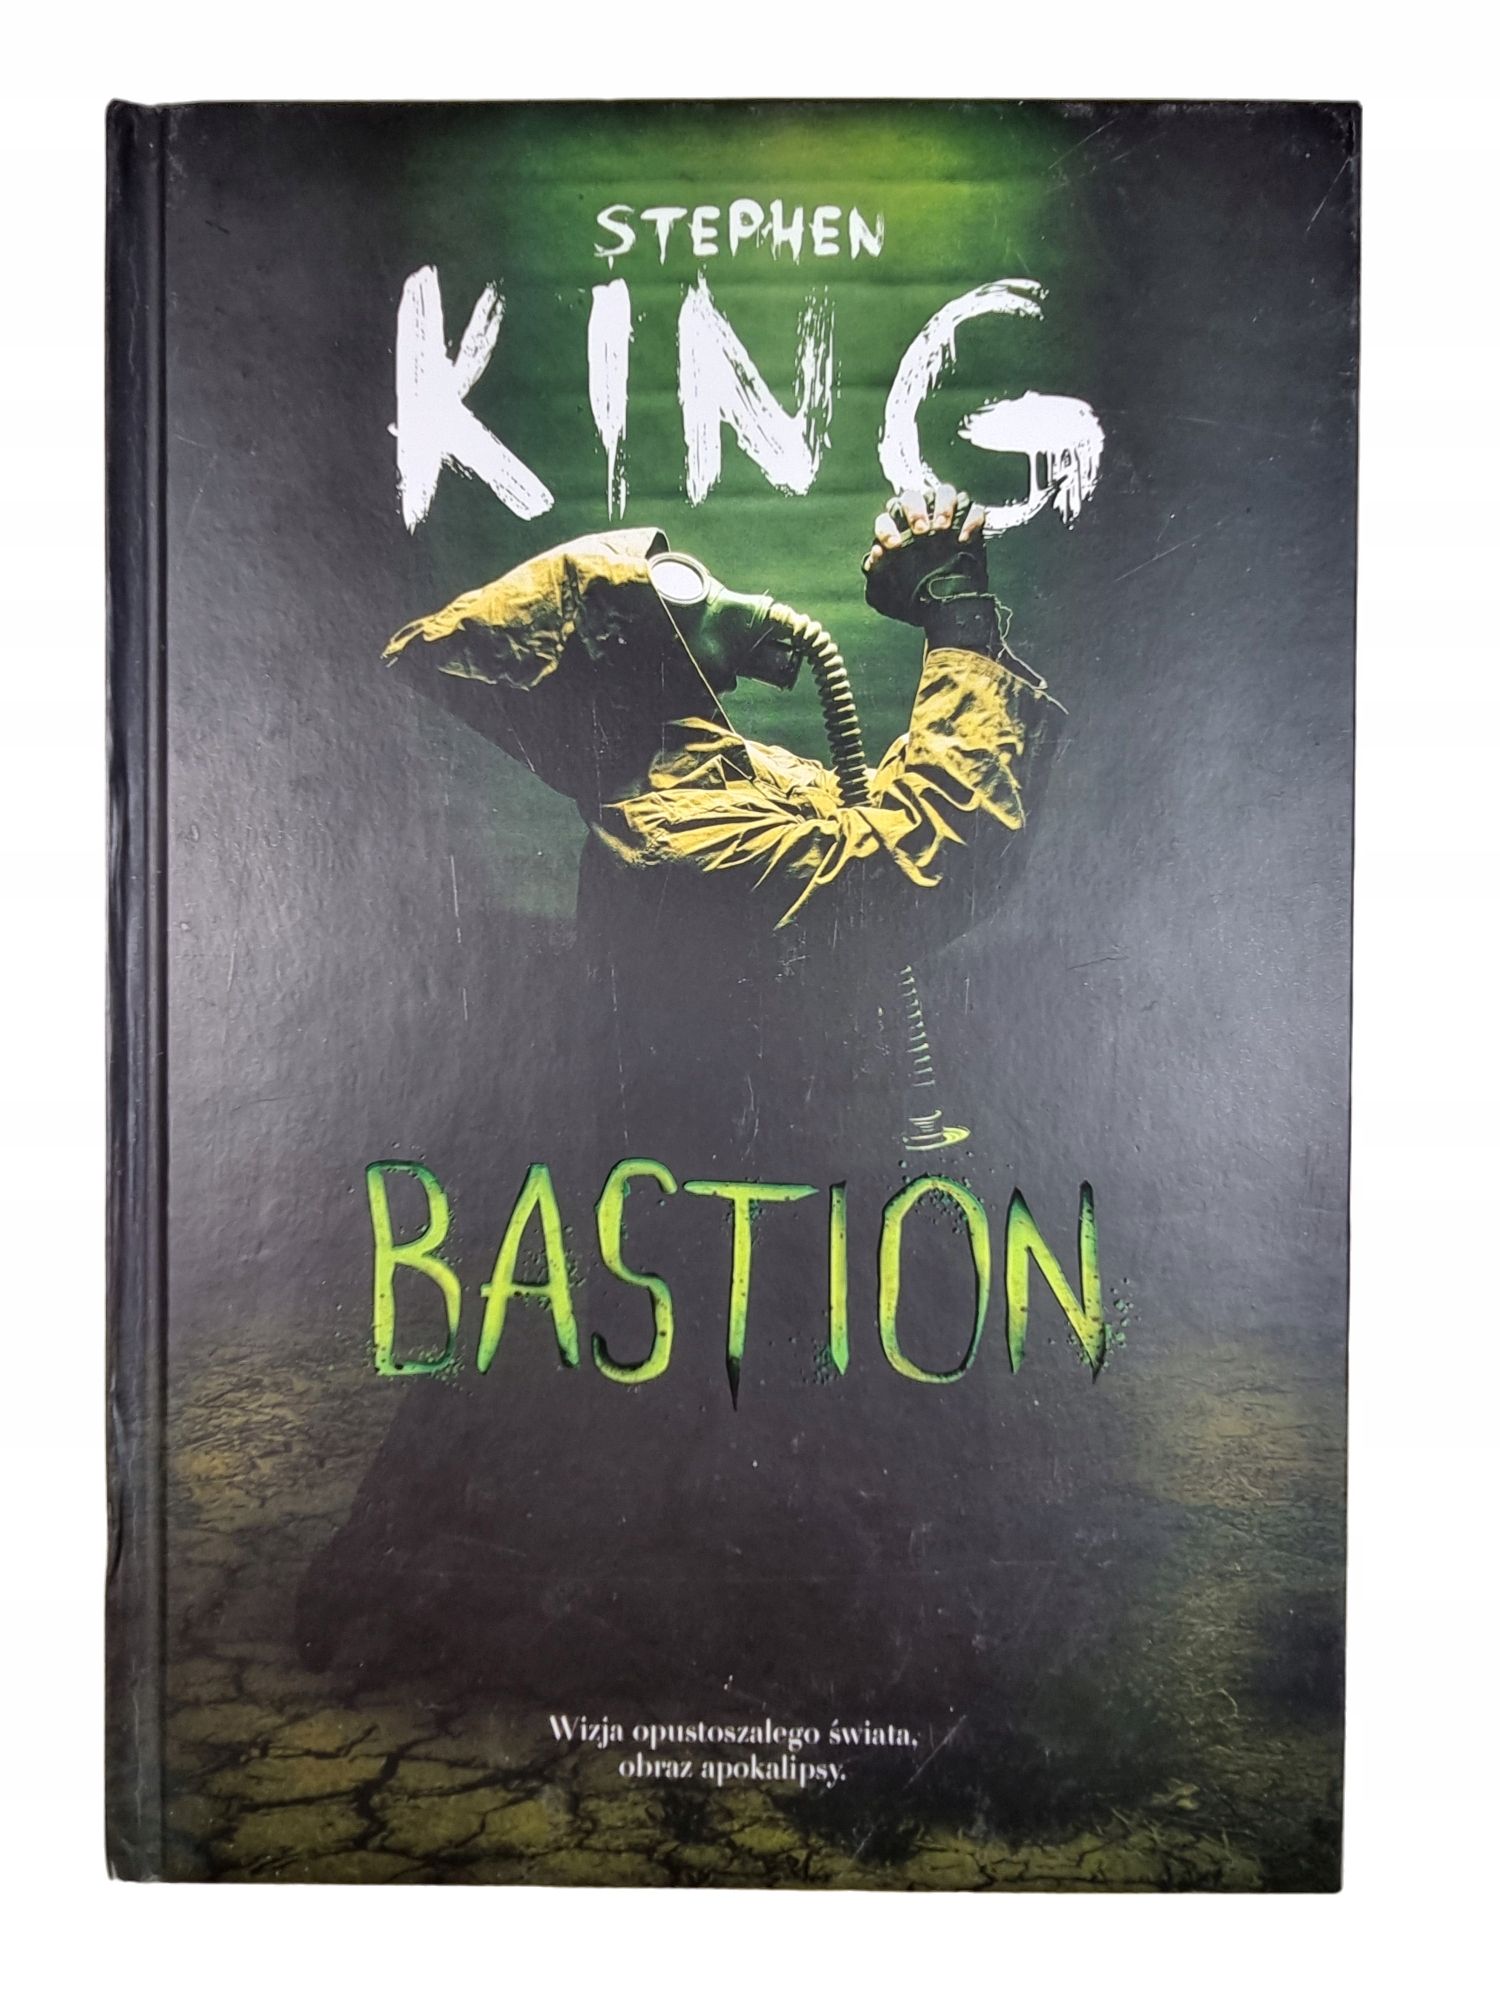 TWARDA / Bastion / Stephen King